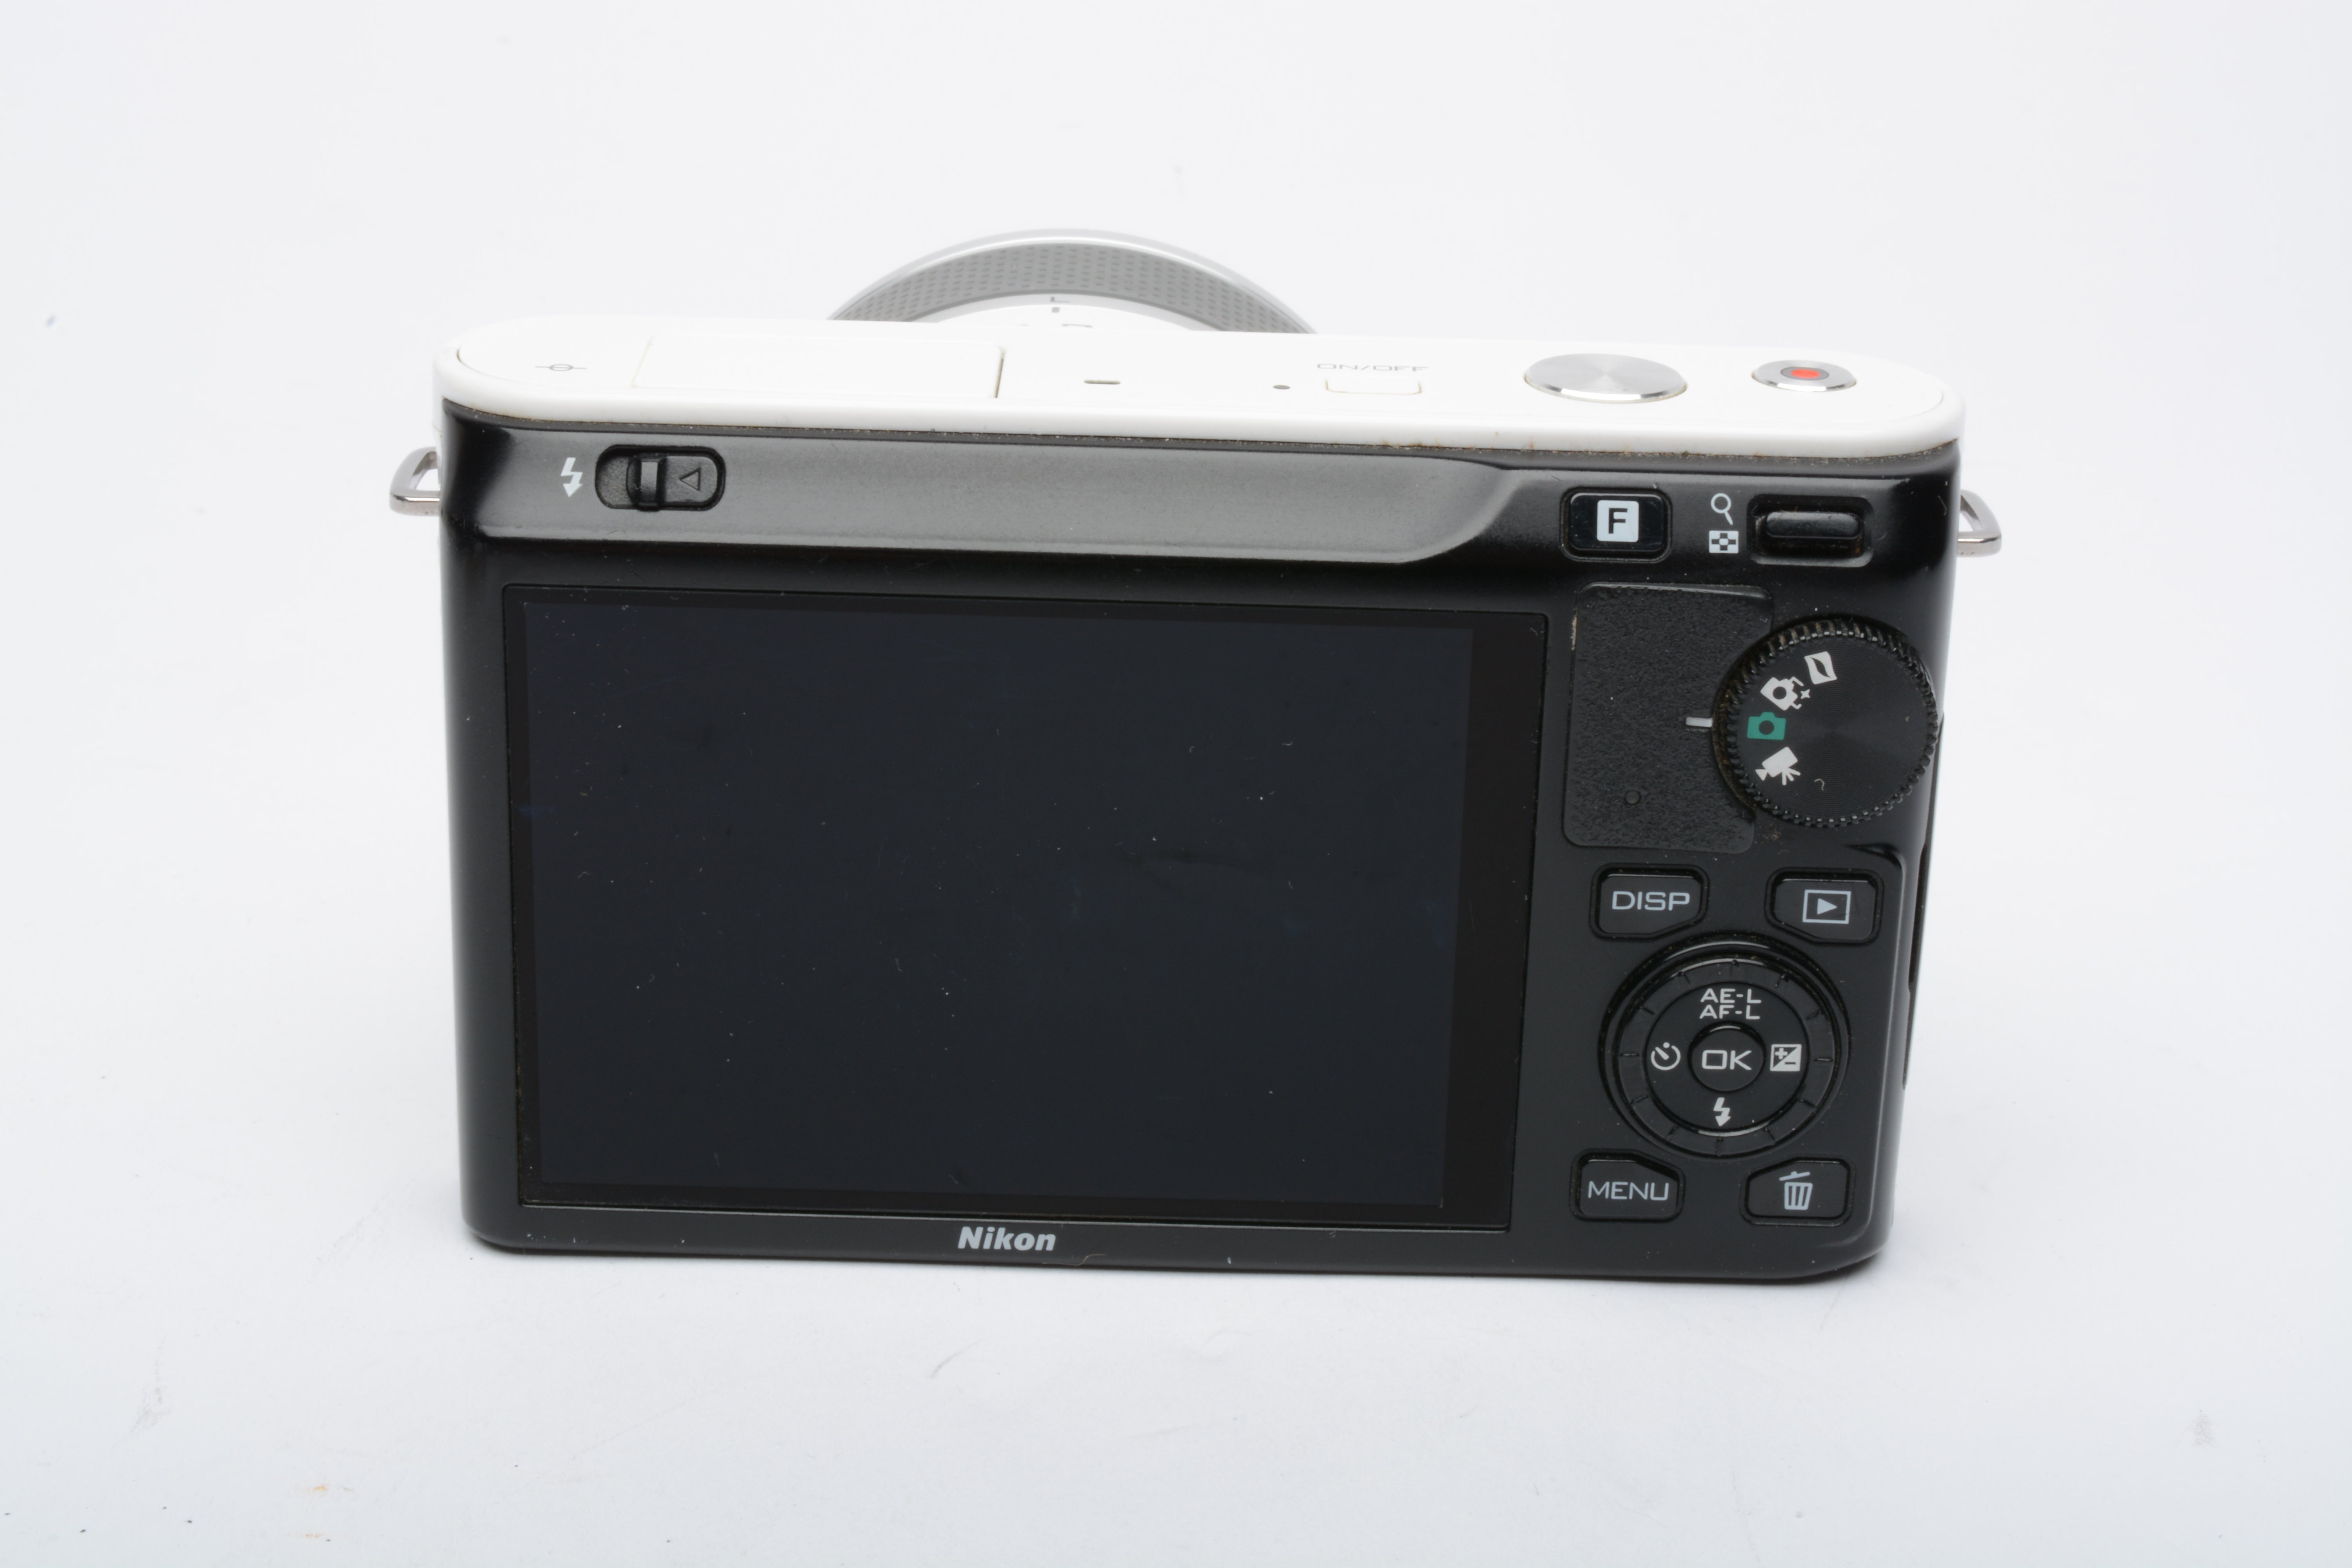 Nikon J1 (white) w/10-30 u0026 30-110mm 2-lens kit